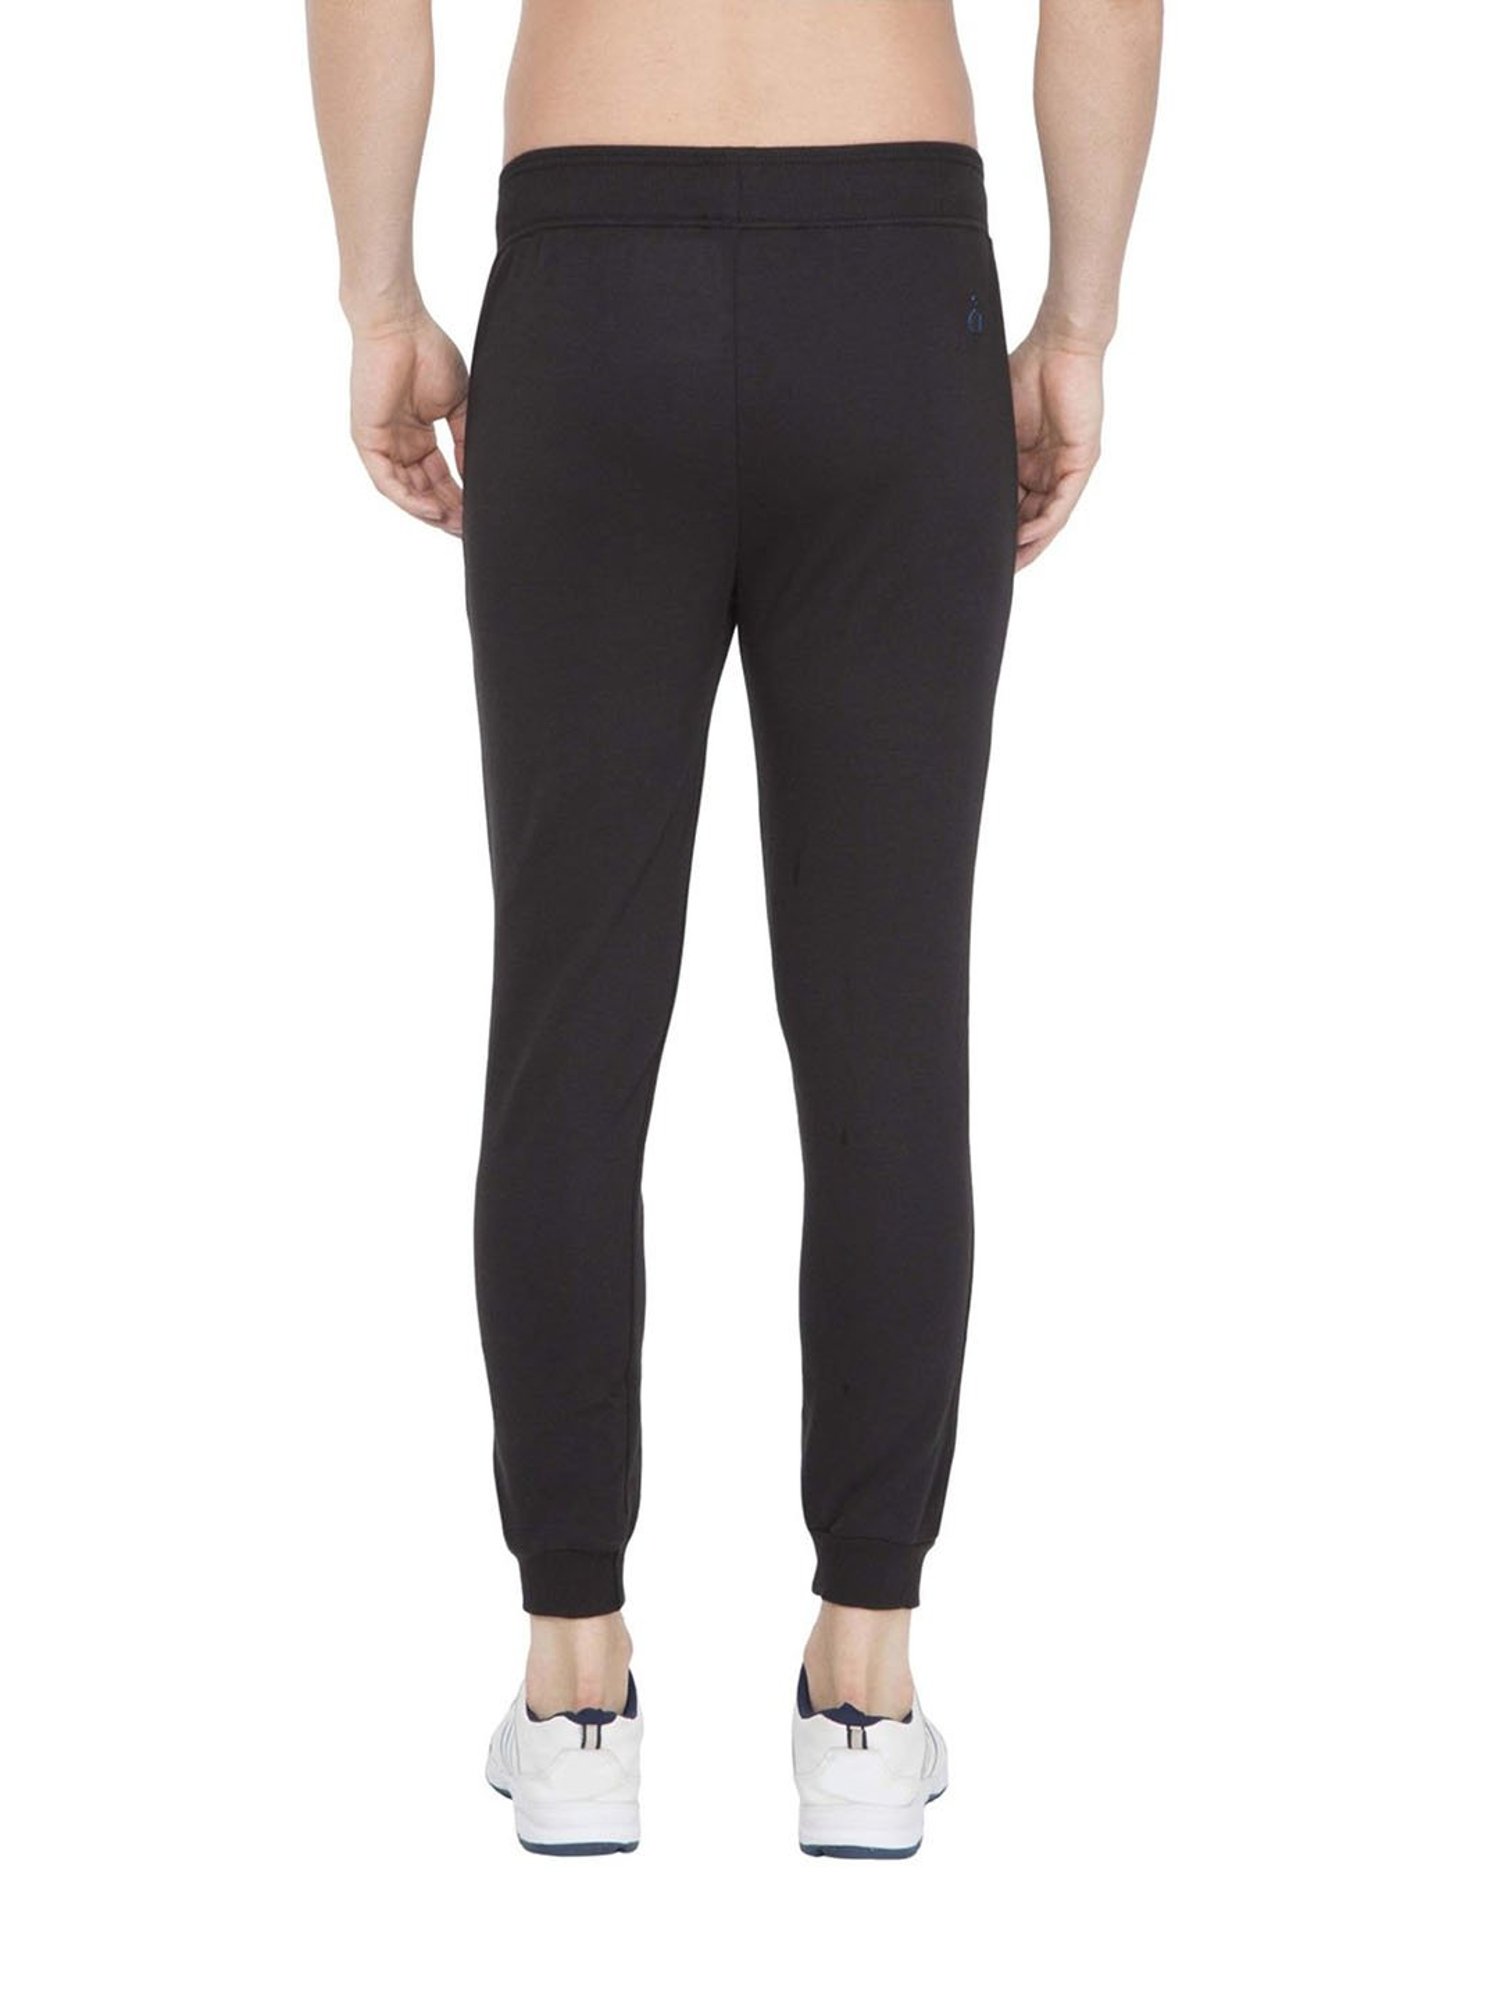 Women's Jockey Premium Pocket Yoga Pants Color: GRAPHITE GRAY Size: SMALL